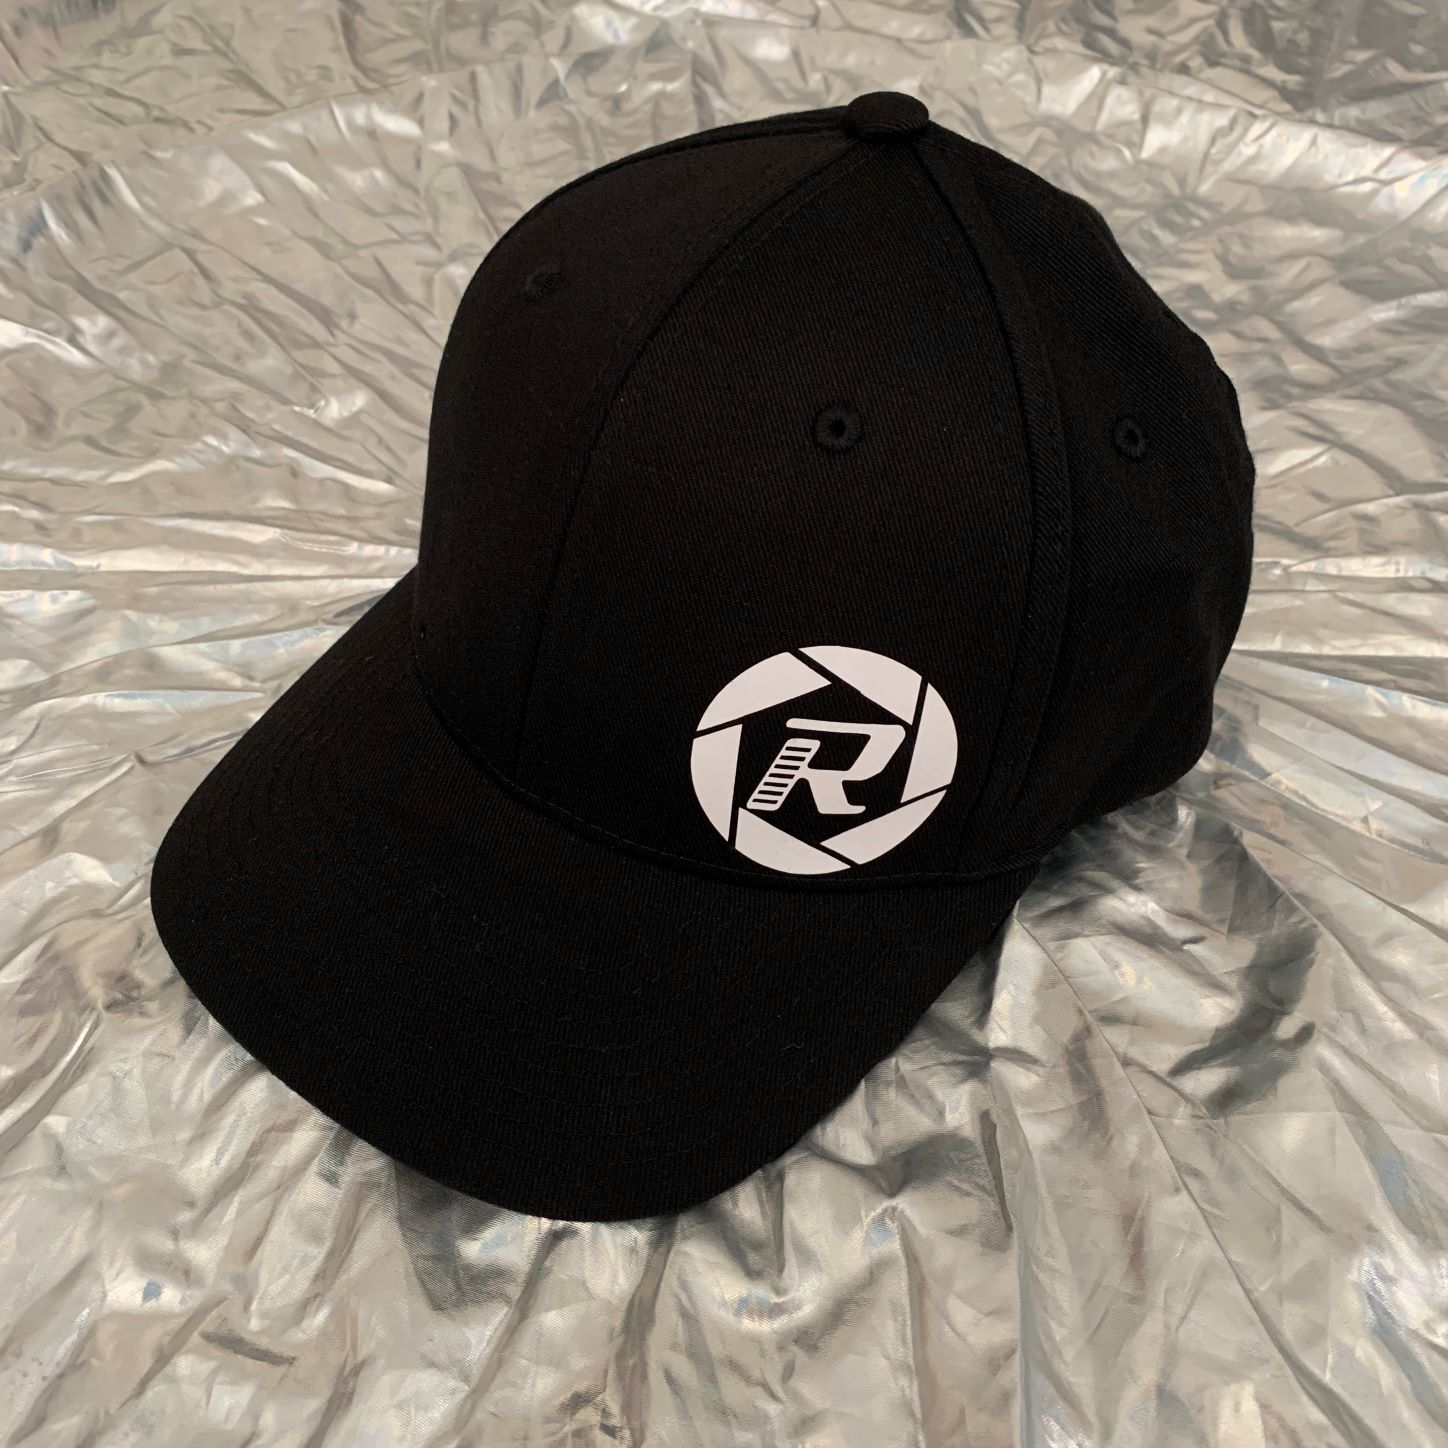 Design Your Own Custom - FlexFit SnapBack Trucker Hat - Flat Bill - RC SWAG  - Stickers, T-Shirts, Hoodies, RC Kits & More!